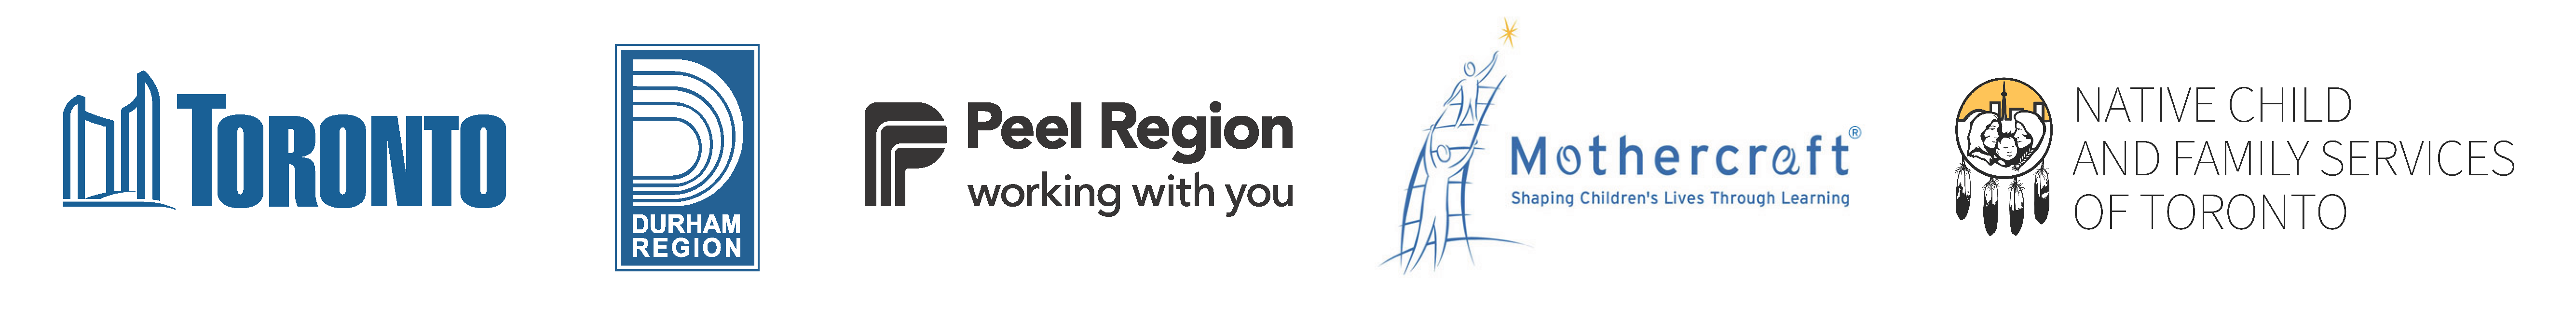 City of Toronto Logo, Region of Durham Logo, Region of Peel Logo, Mothercraft Logo, Native Child and Family Services Logo 